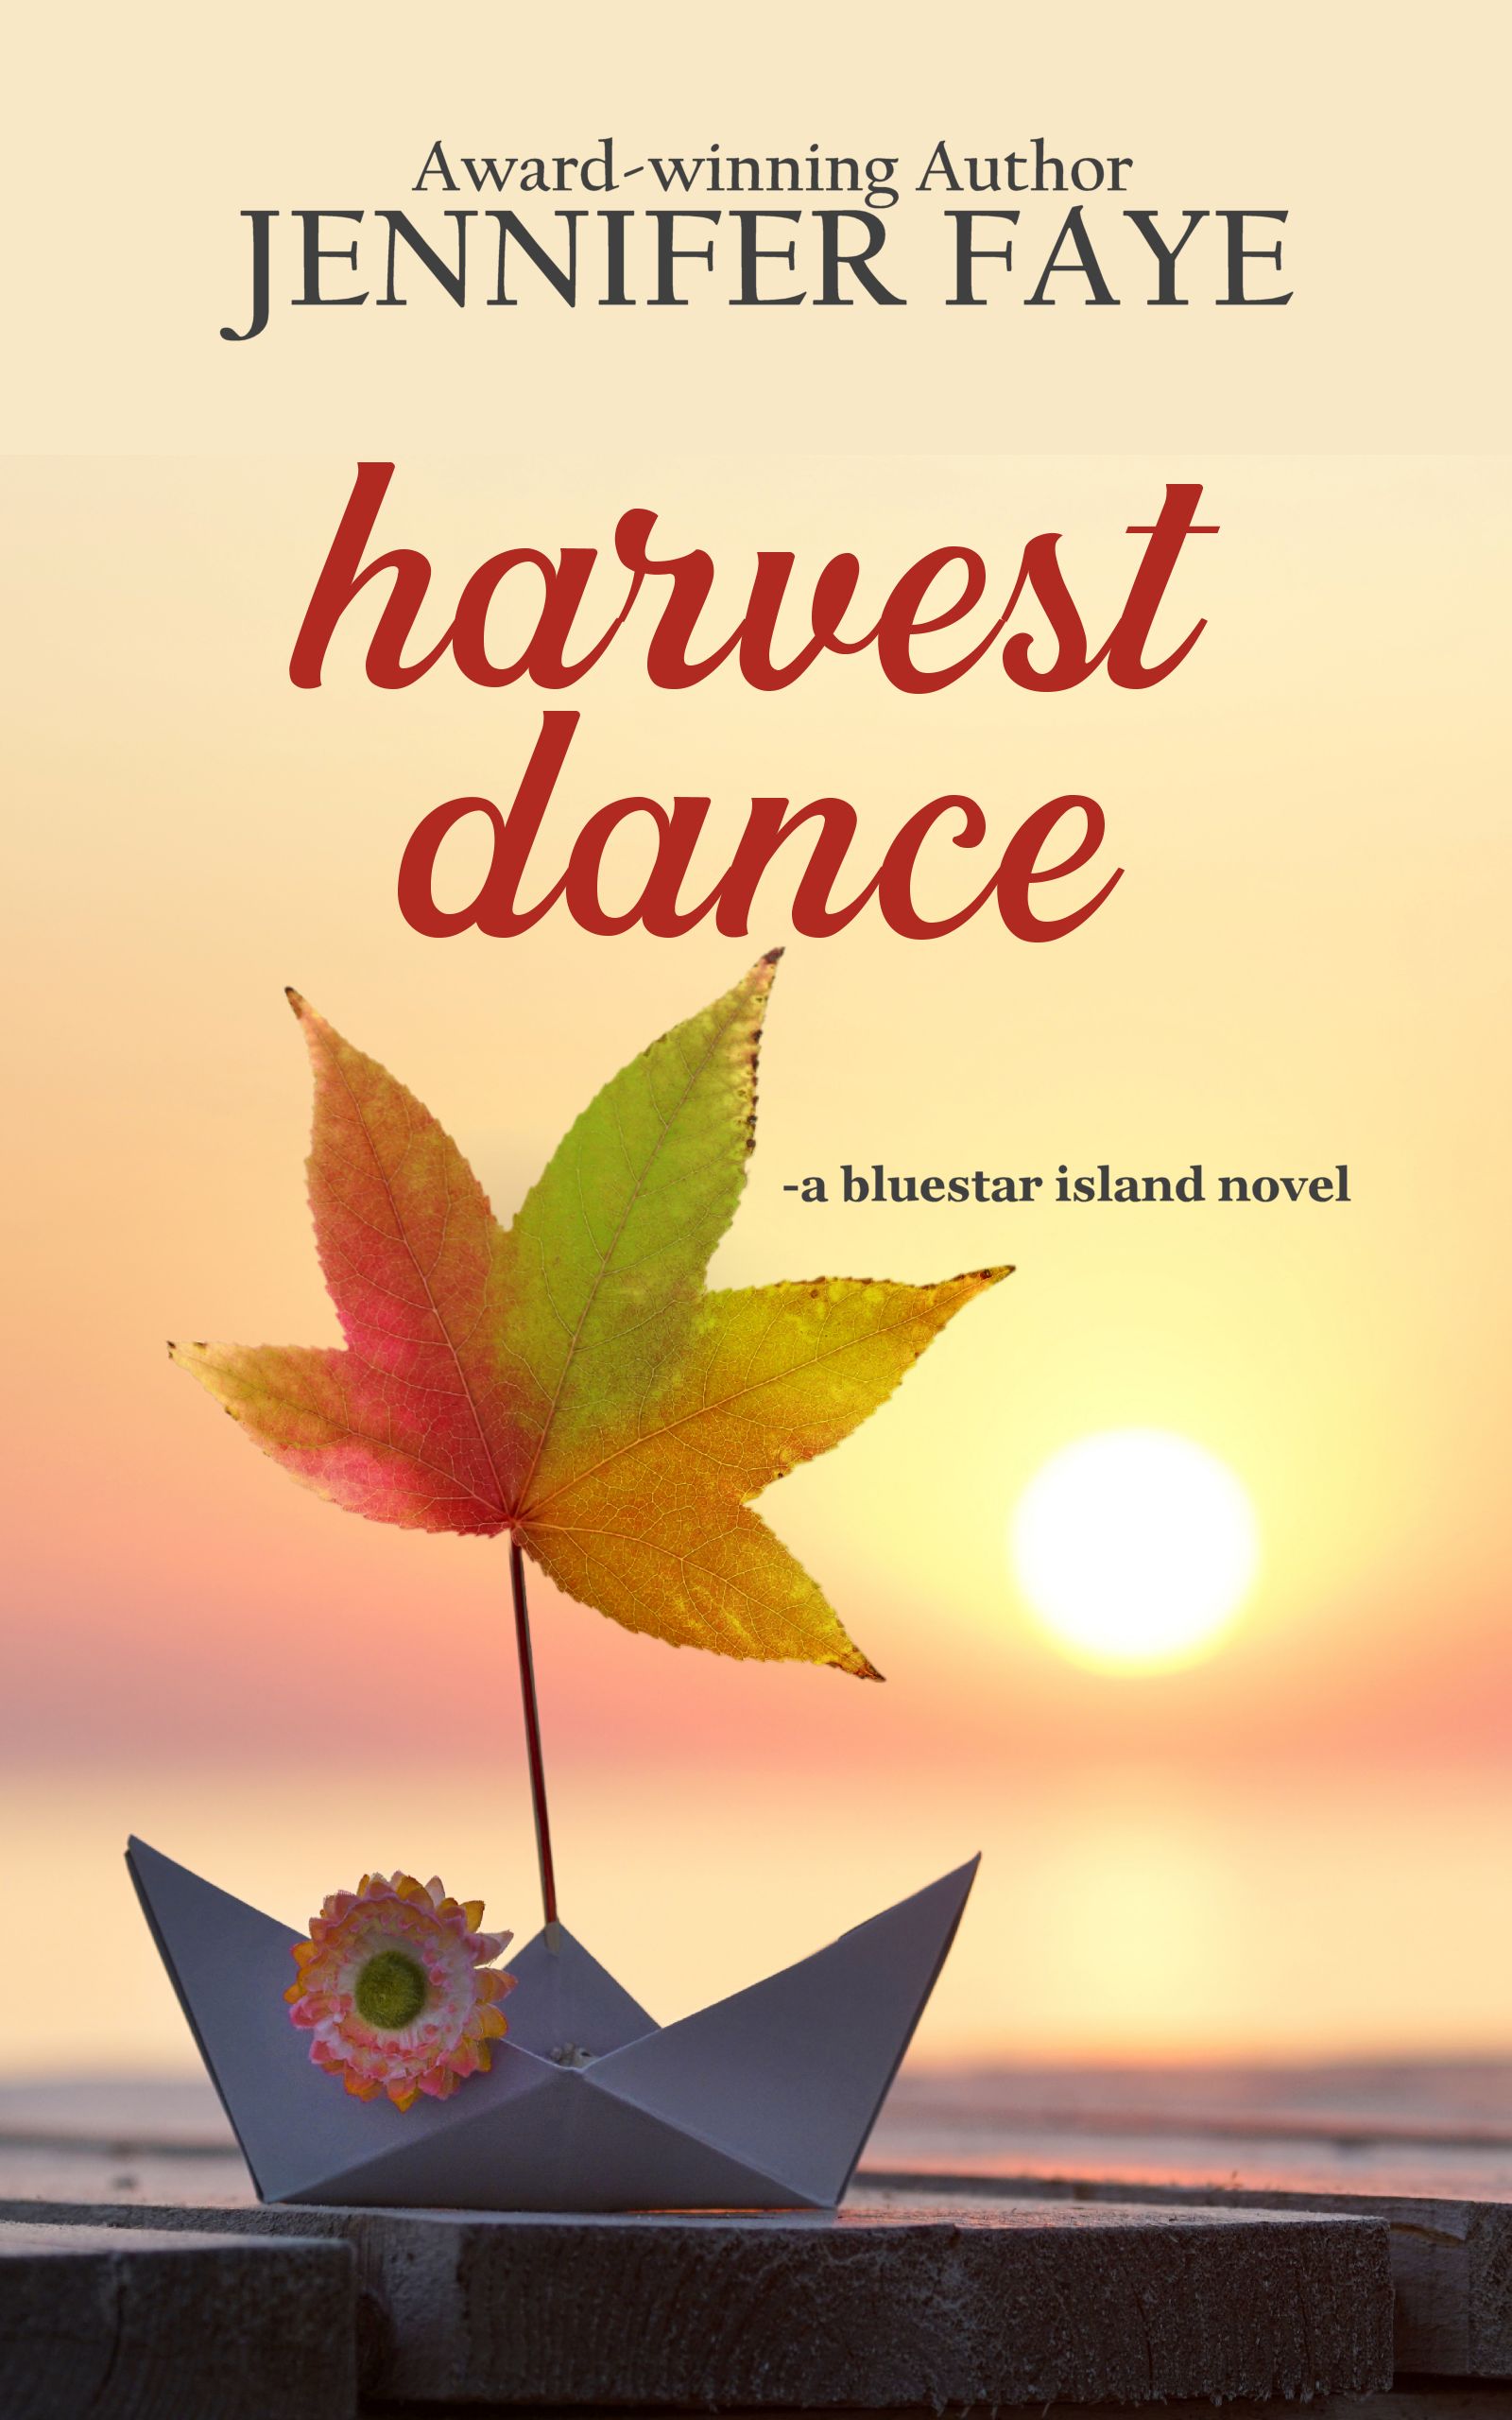 Harvest Dance